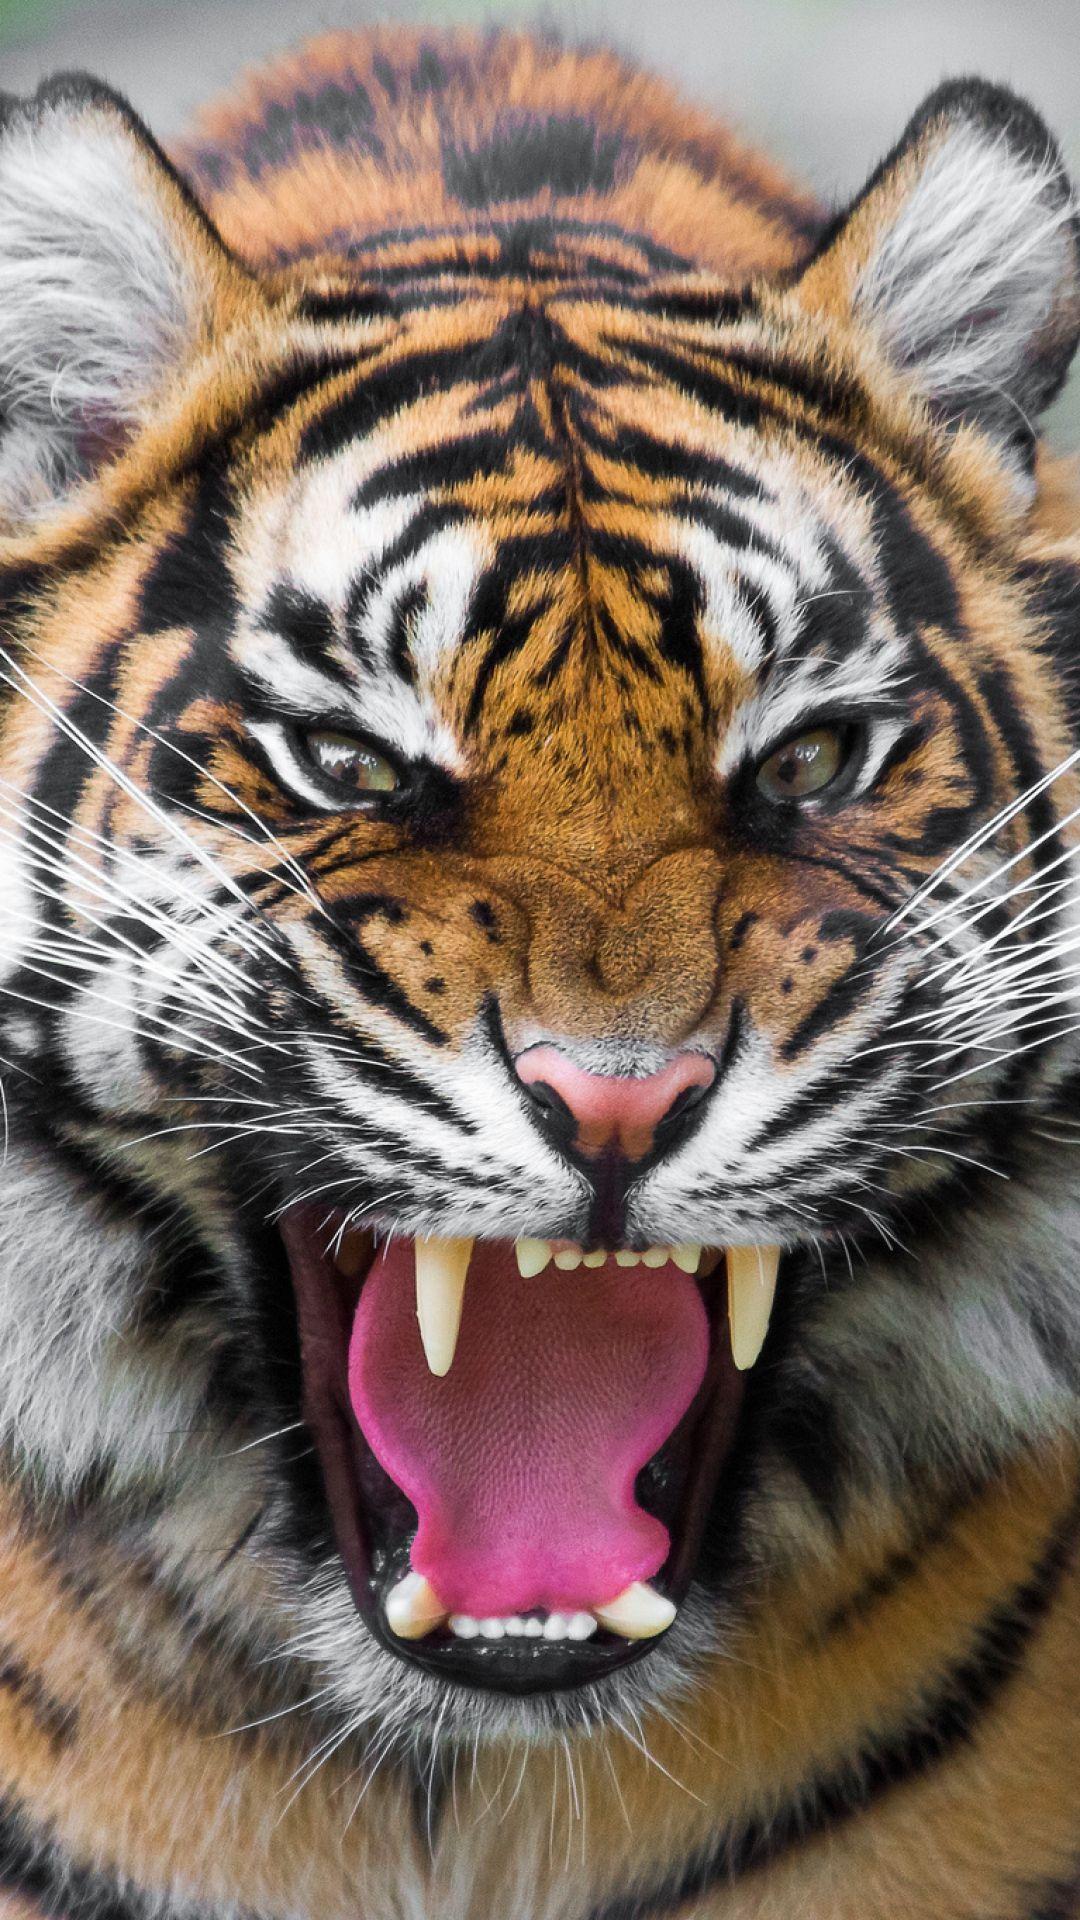 tiger, predator, teeth, anger, aggression. PHOTOGRAPHY NO NUDITY